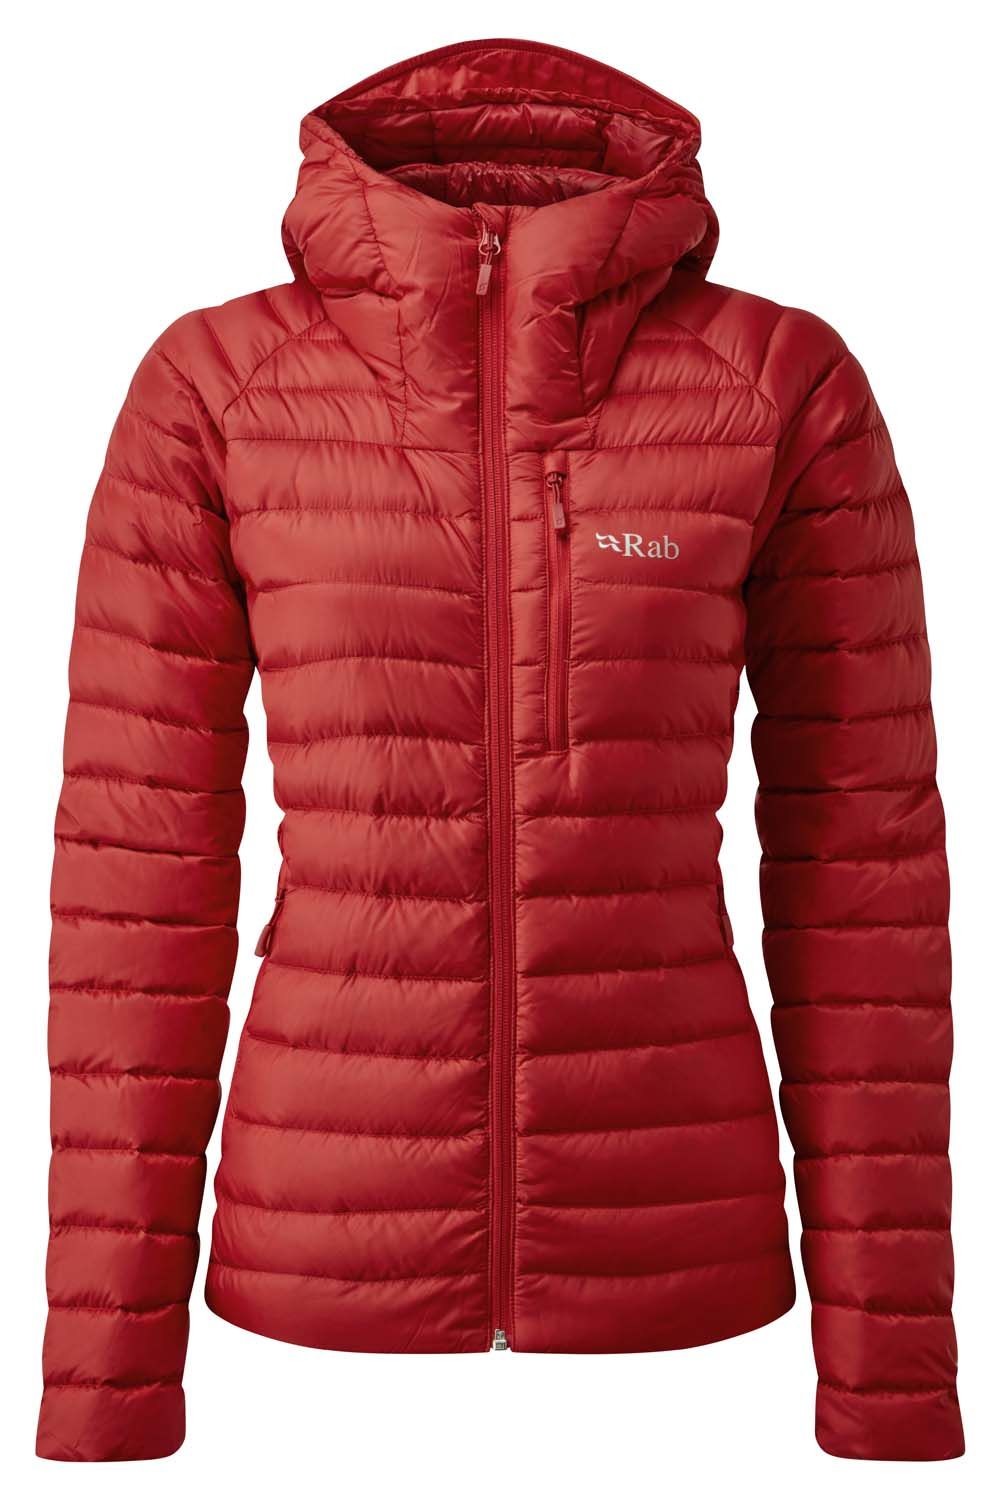 Rab Microlight Alpine Jacket para mujer, rellena de pluma